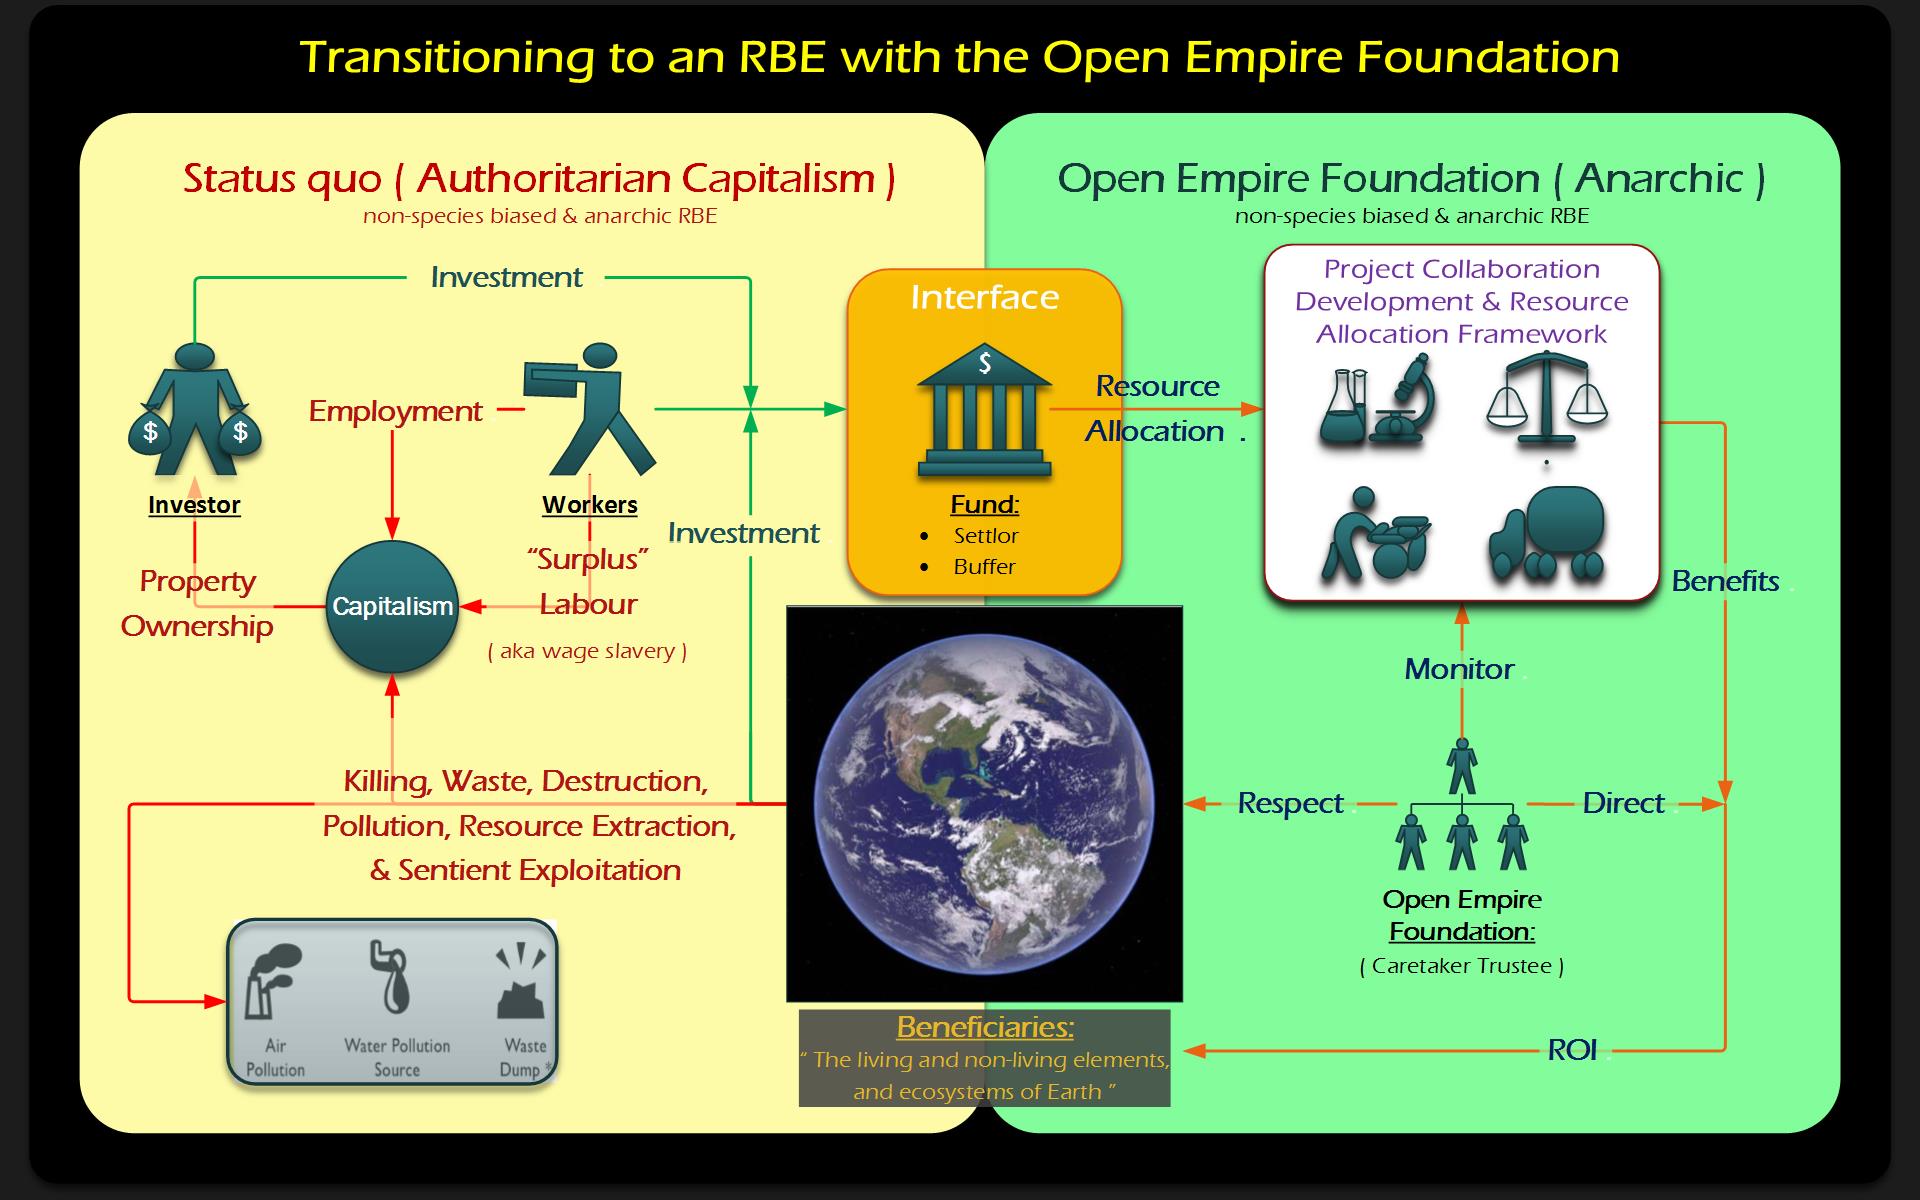 Open Empire Foundation RBE transition vision diagram